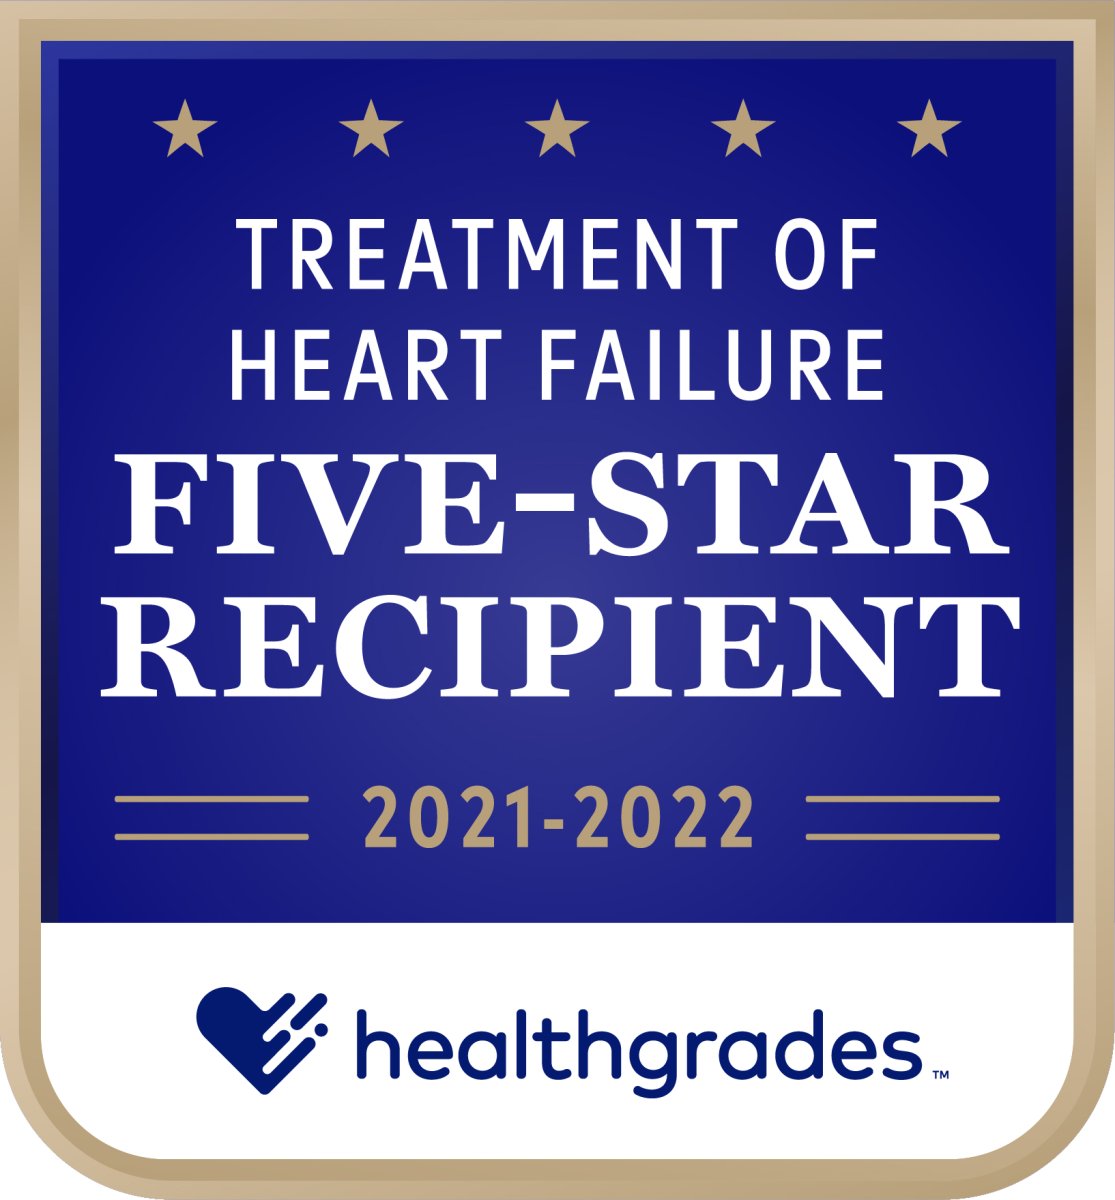 Healthgrades Heart Failure Five-Star